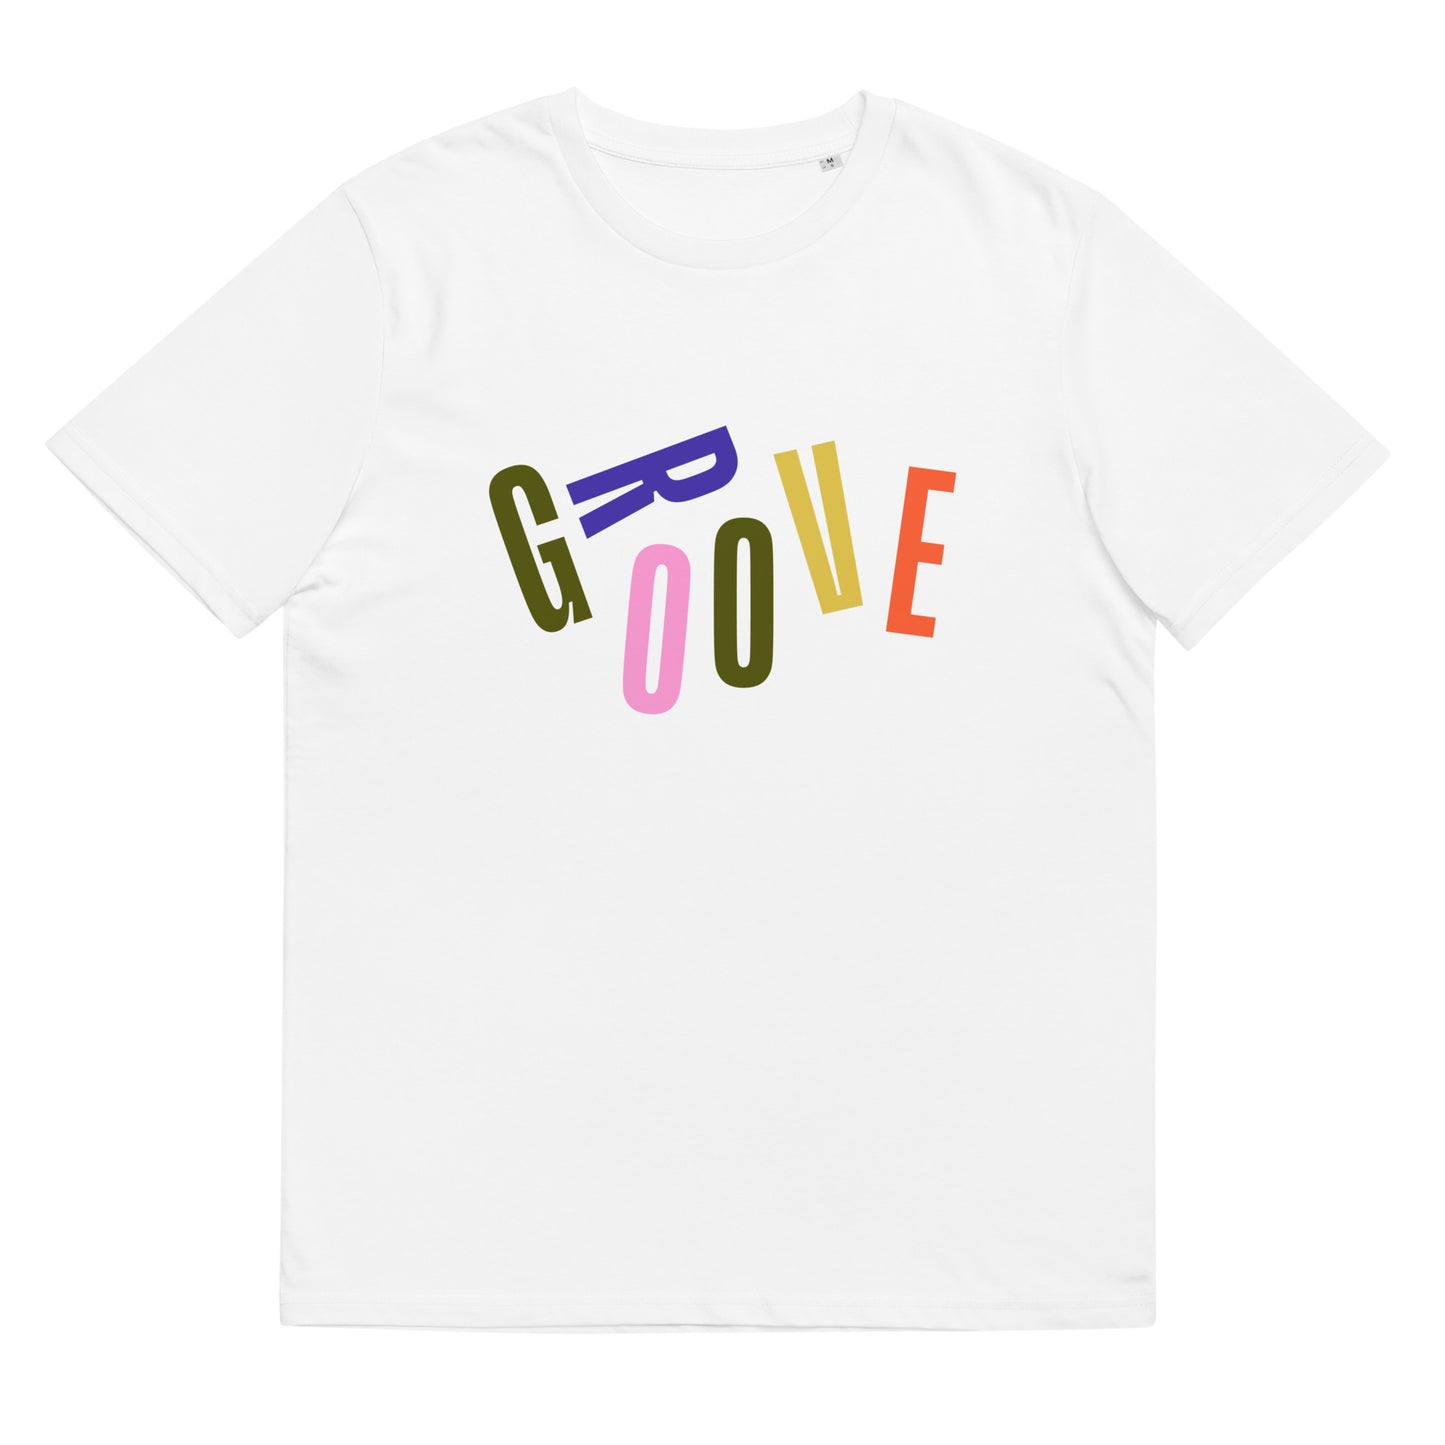 Groove Letters — Unisex organic cotton t-shirt